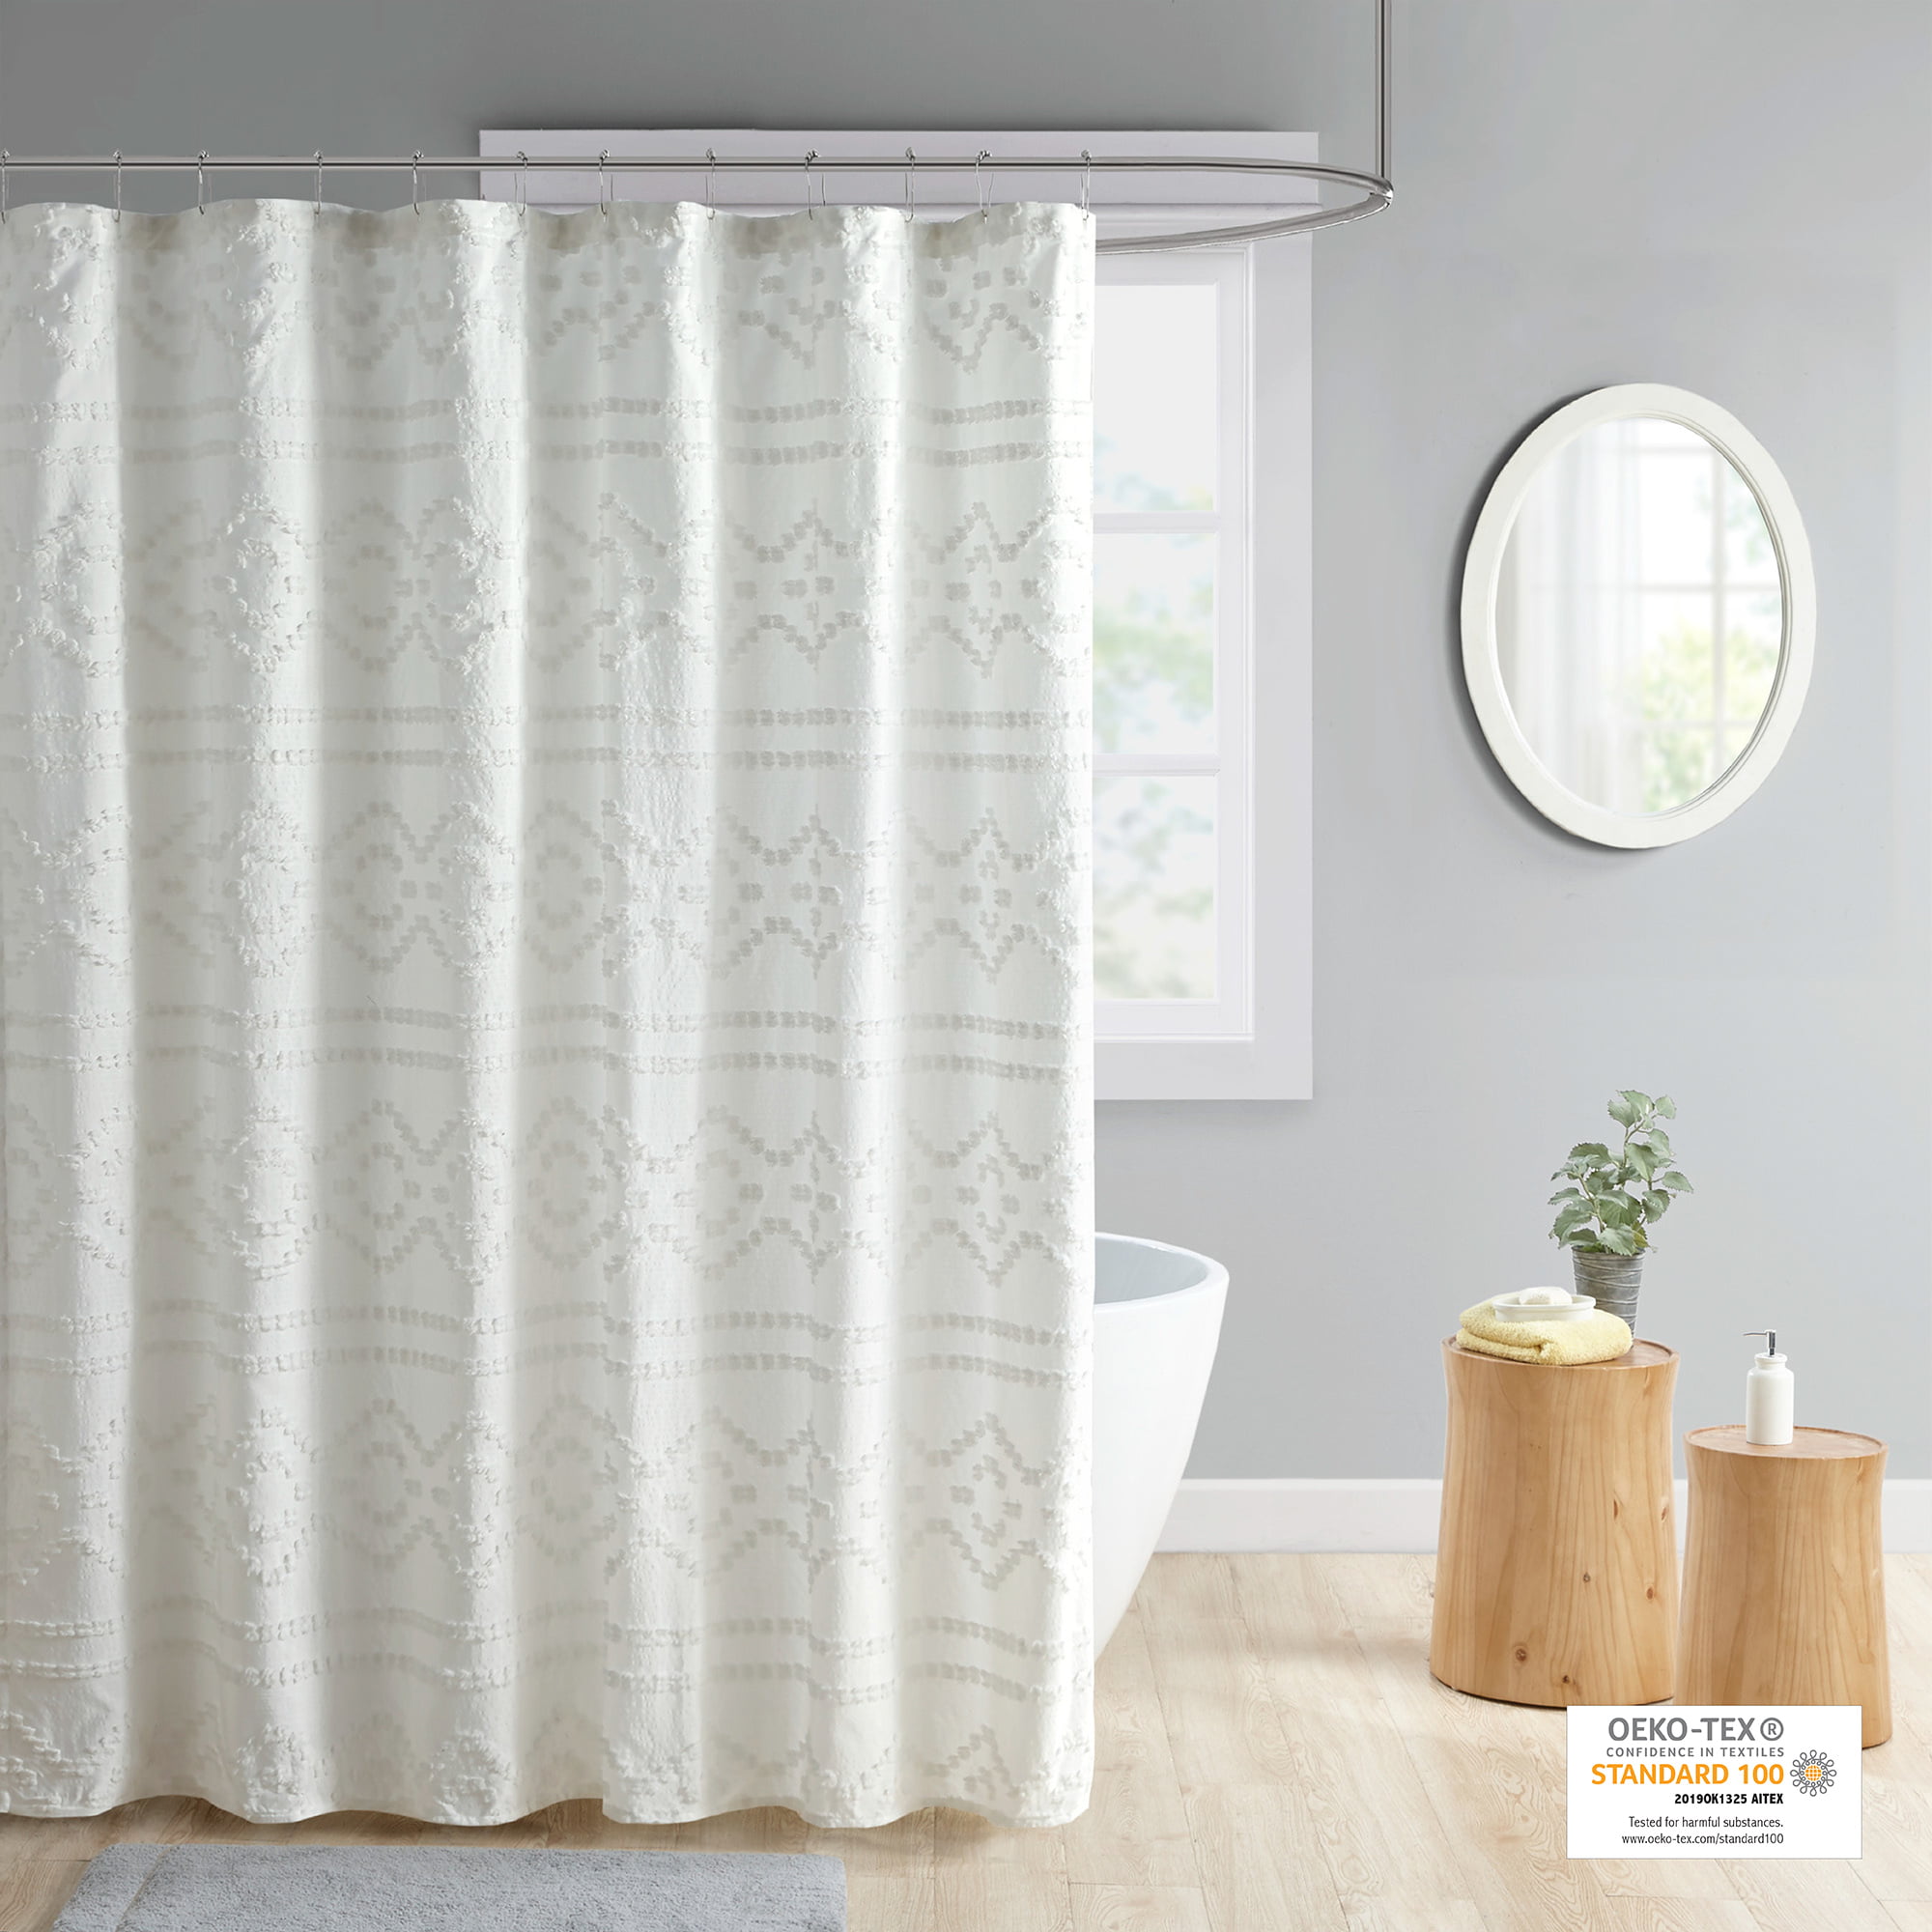 Old tree bark texture Shower Curtain Bathroom Decor Fabric & 12hooks 71*71inches 